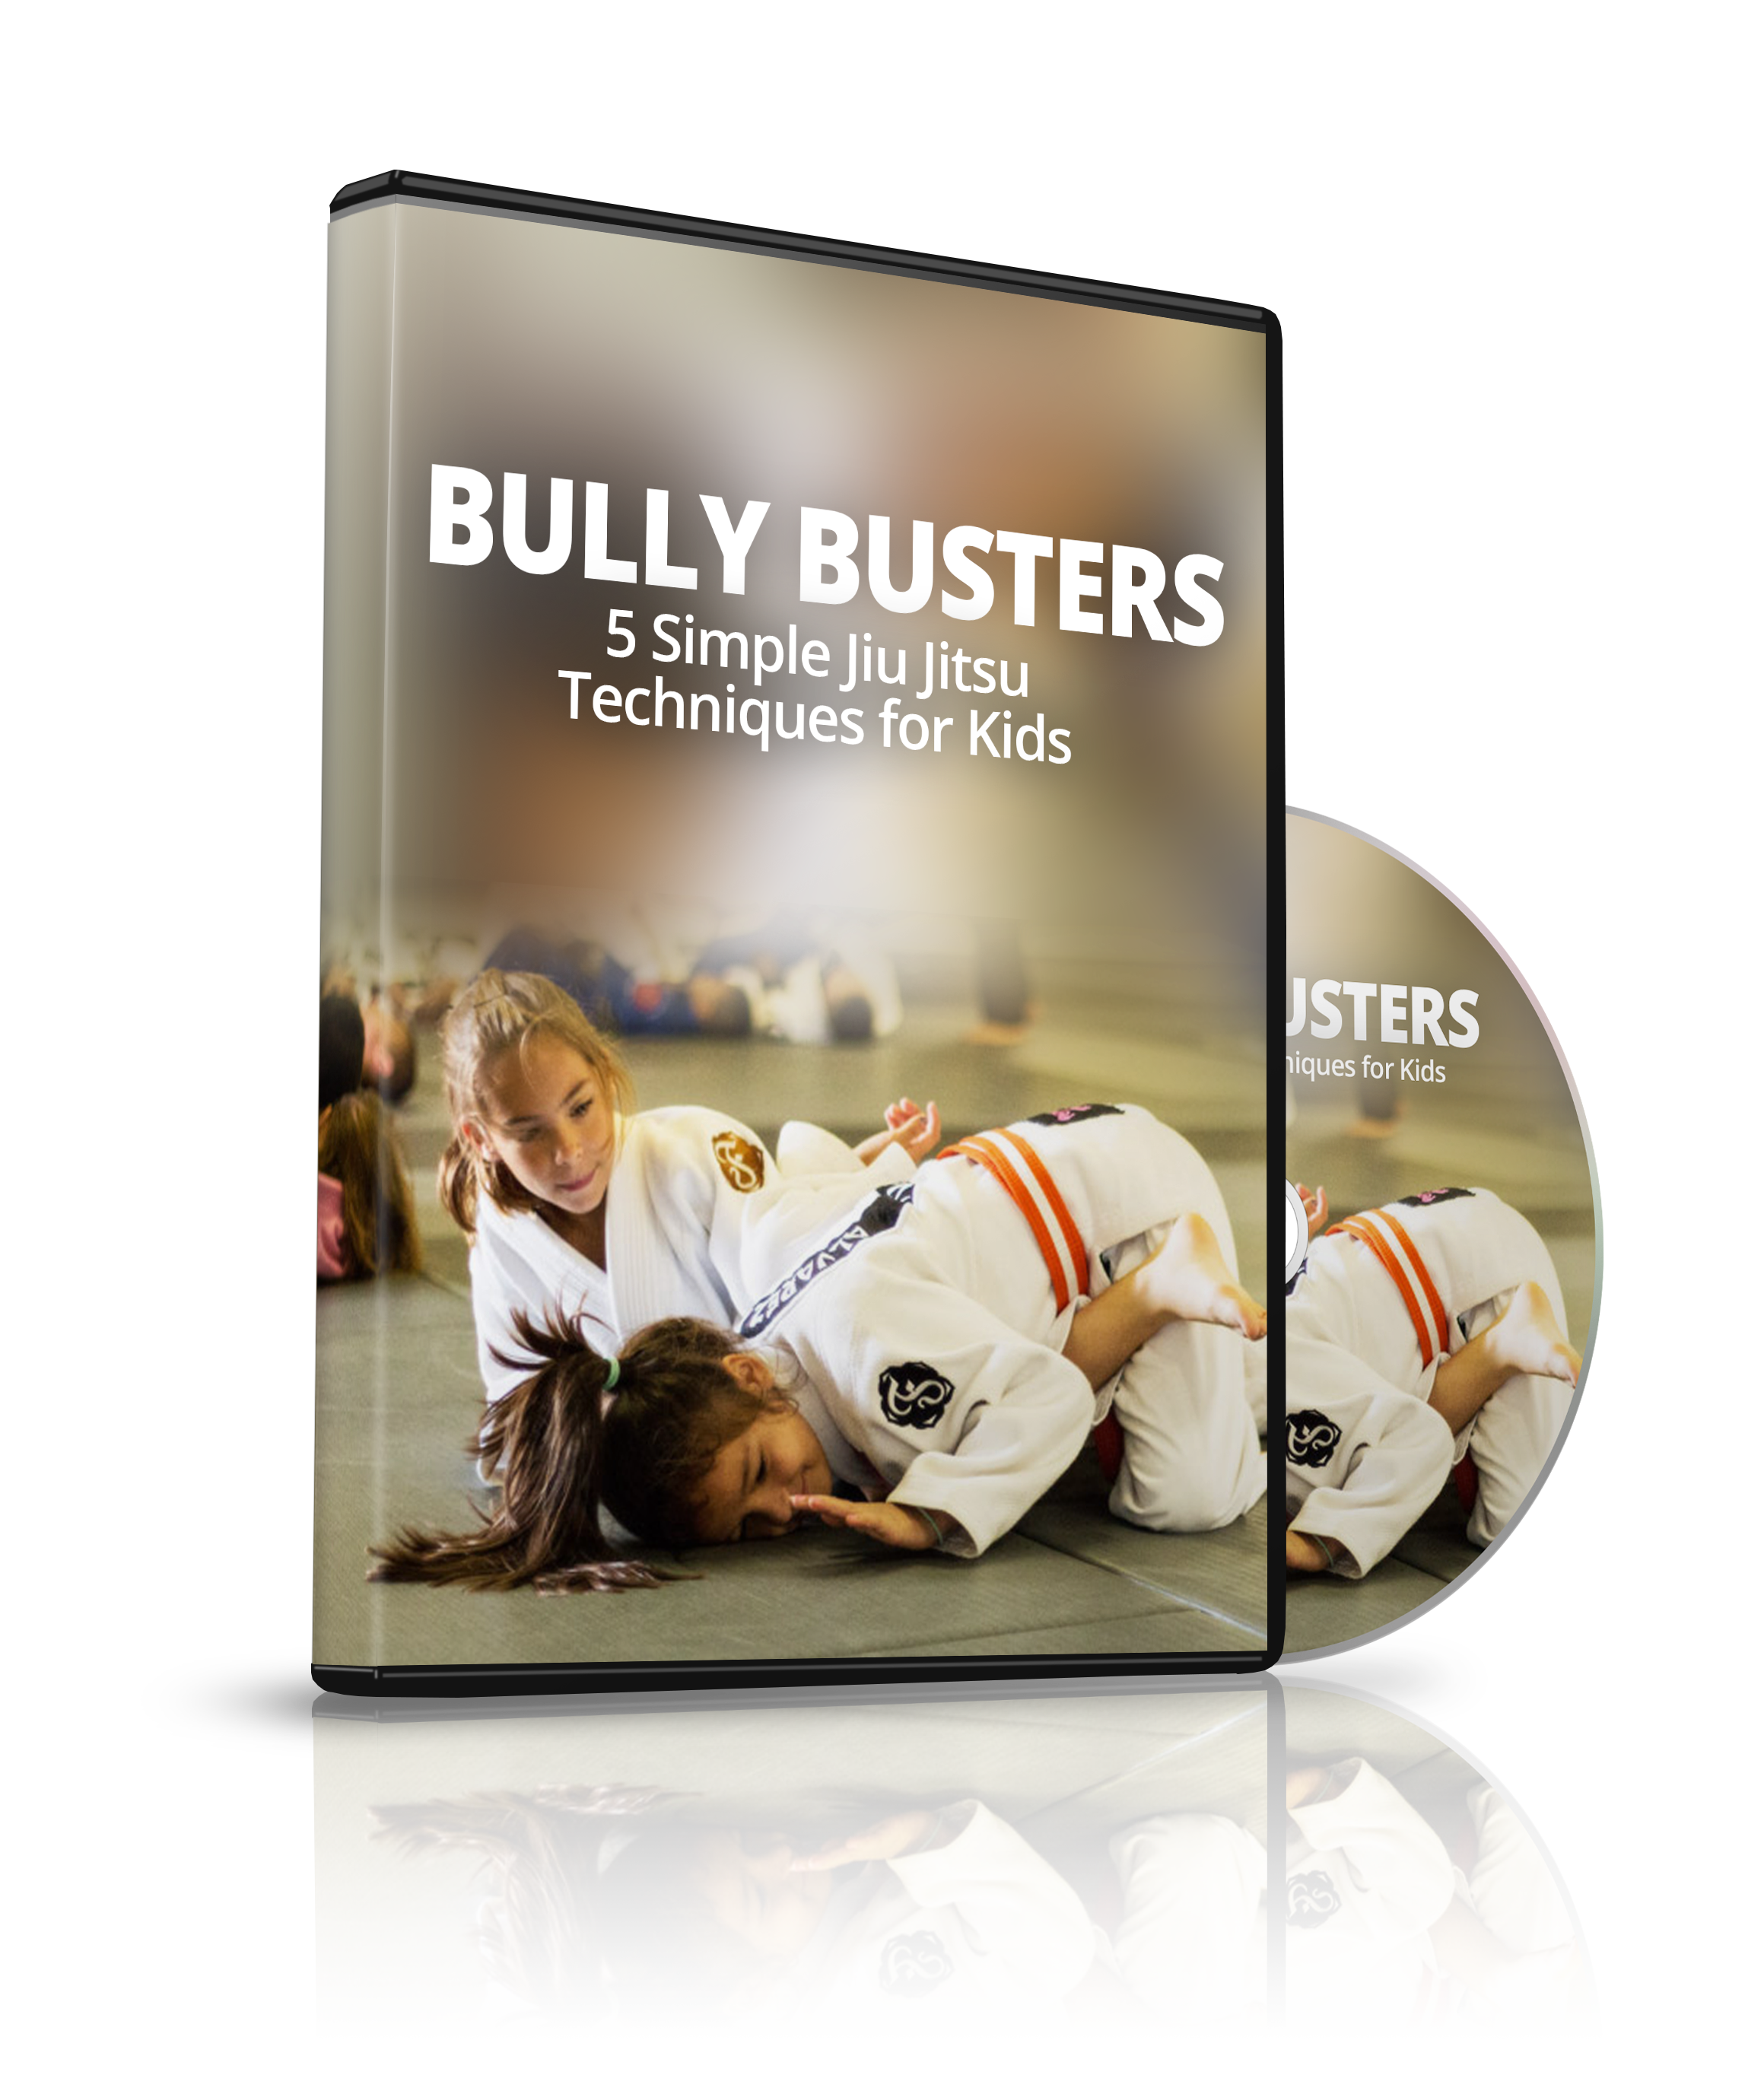 BULLY BUSTERS - 5 Simple Jiu Jitsu Techniques for Kids 3D image